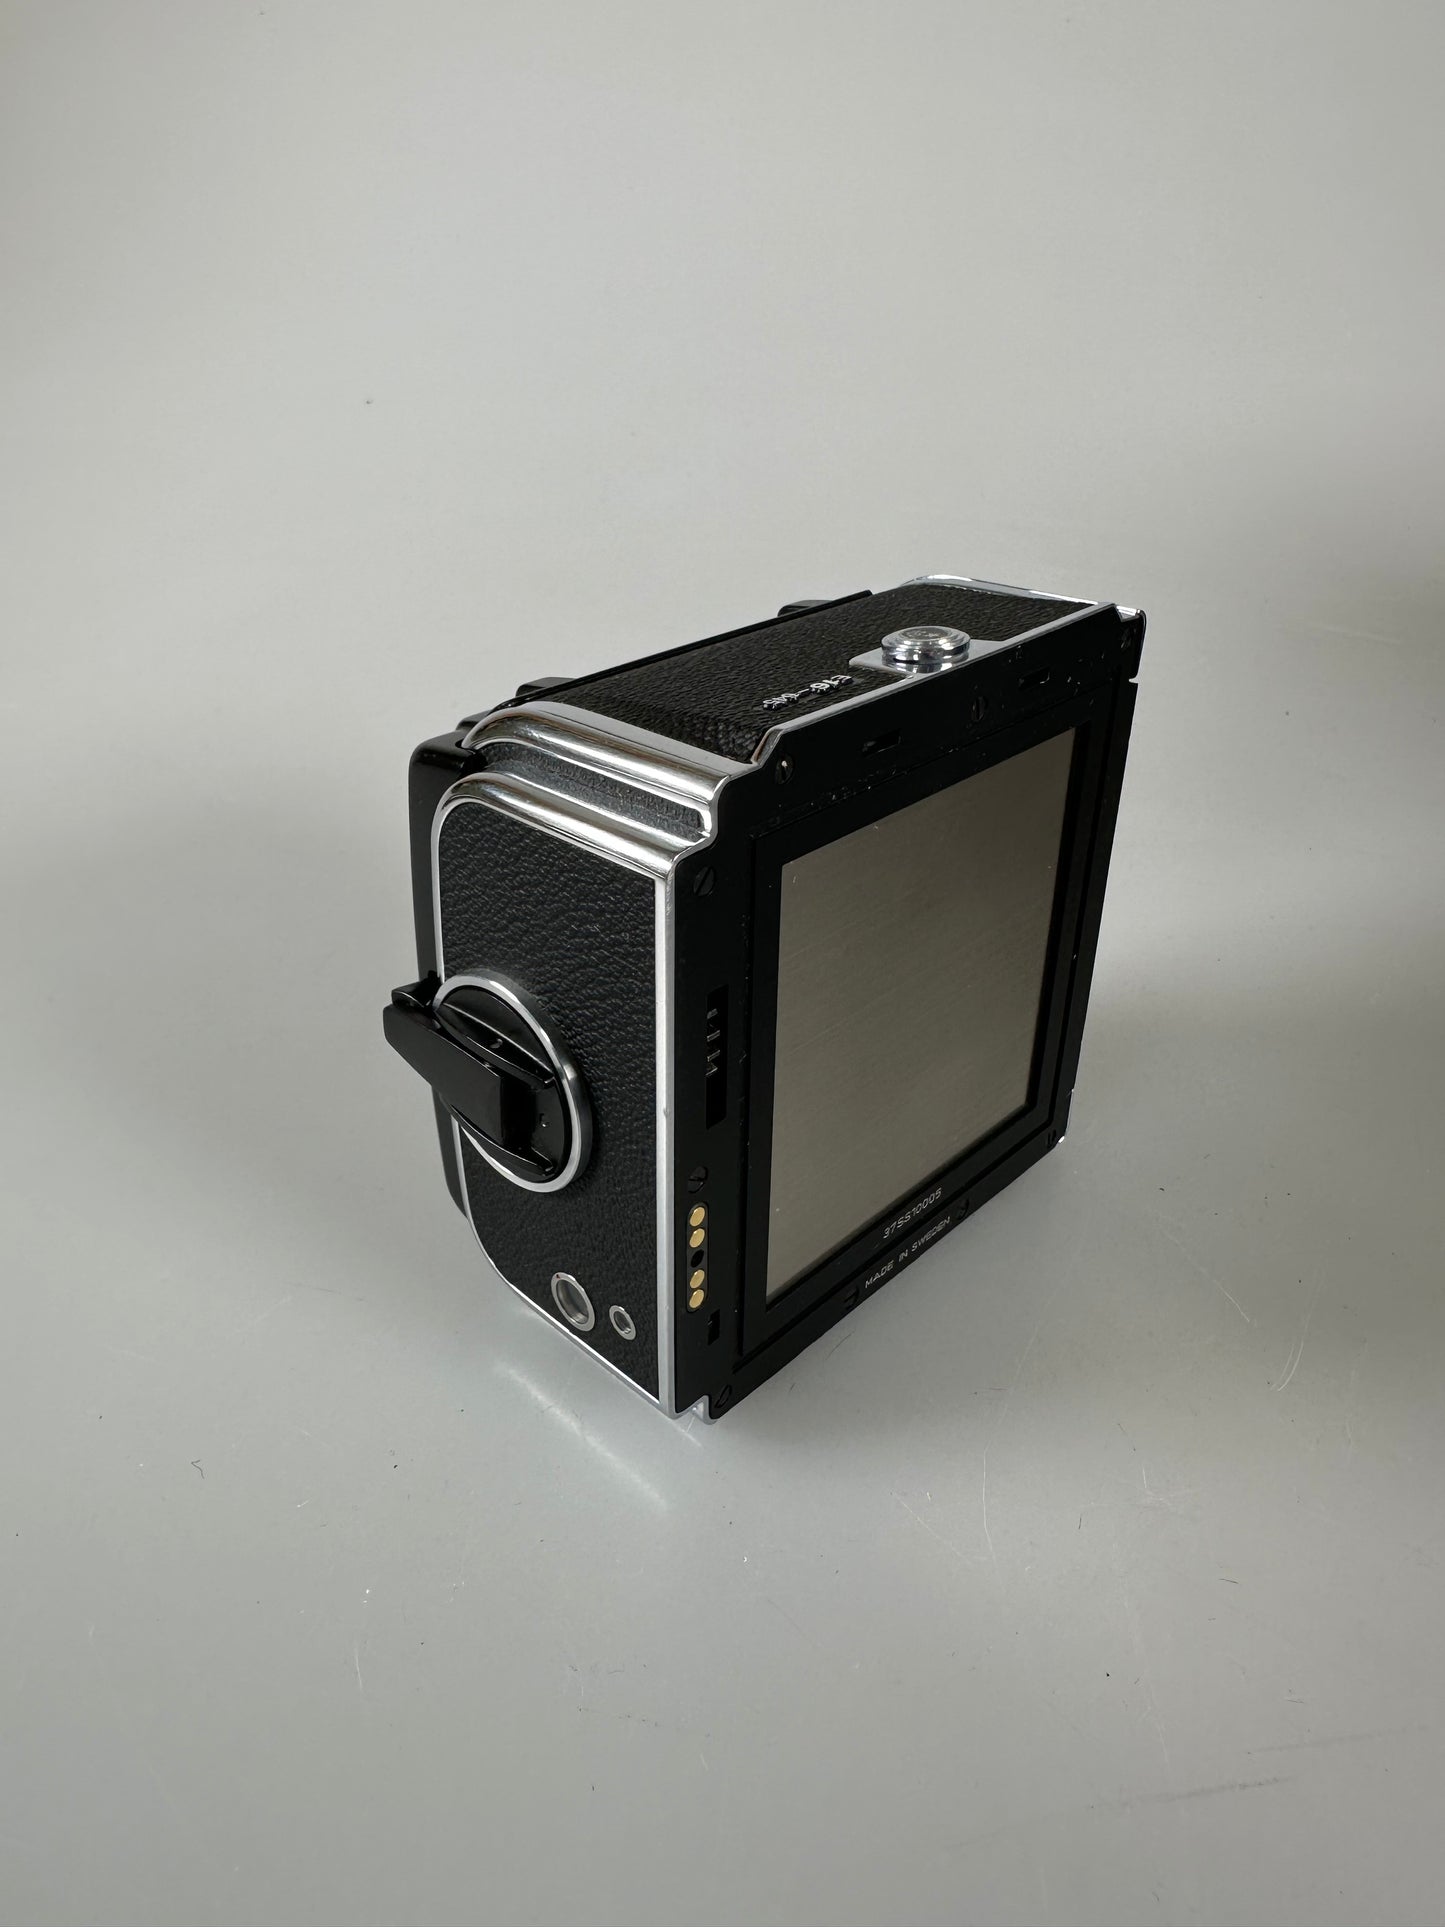 Hasselblad Film Back E16 Type IV 6 x 4.5 2000 Series